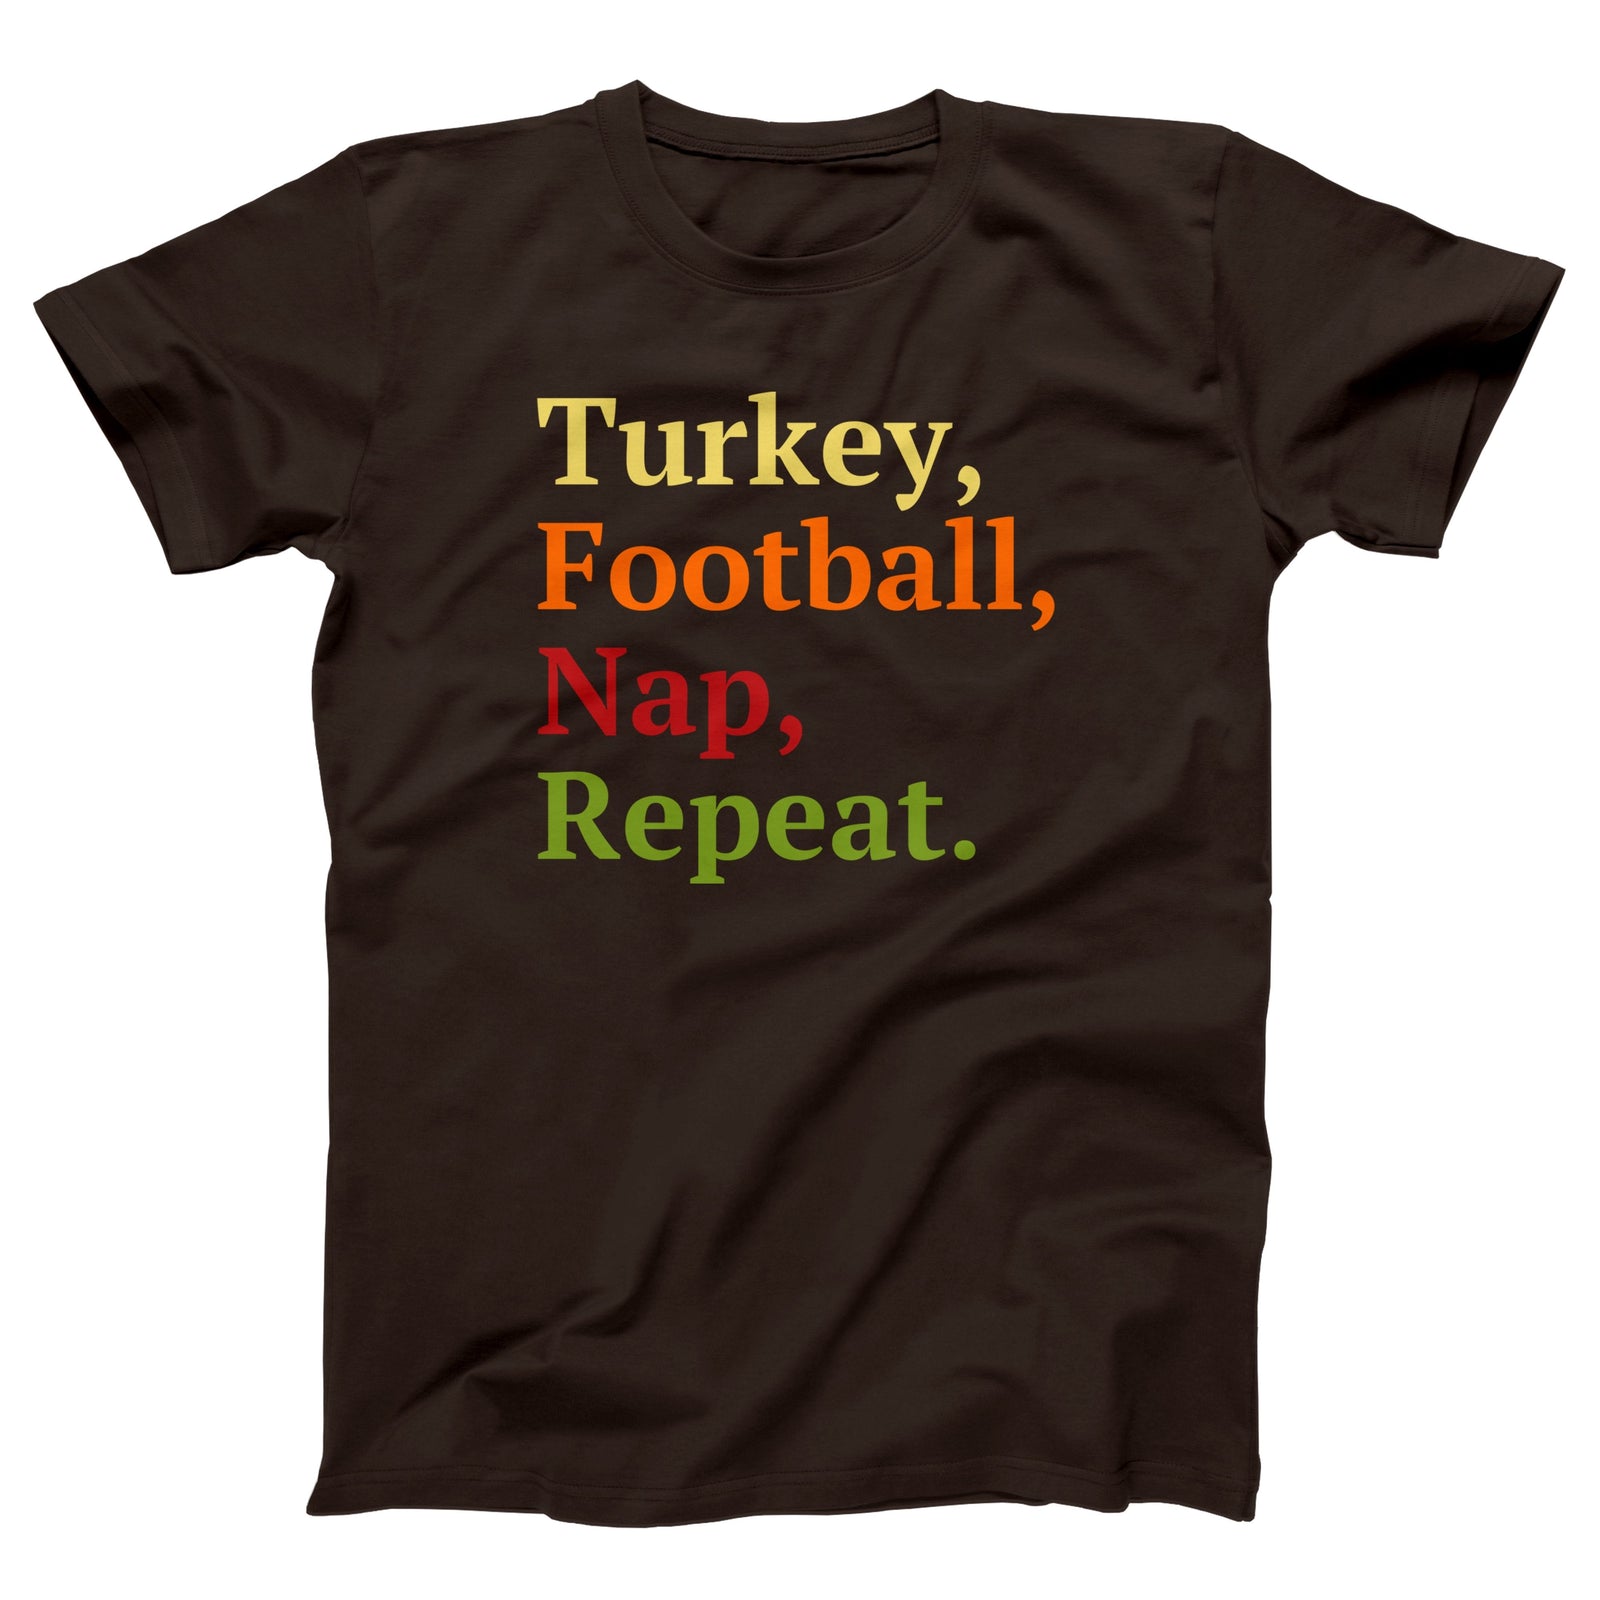 //marionmartigny.com/s/files/1/0274/2488/2766/products/turkey-football-nap-repeat-adult-unisex-t-shirt-315906_5000x.jpg?v=1675243228 5000w,
    //marionmartigny.com/s/files/1/0274/2488/2766/products/turkey-football-nap-repeat-adult-unisex-t-shirt-315906_4500x.jpg?v=1675243228 4500w,
    //marionmartigny.com/s/files/1/0274/2488/2766/products/turkey-football-nap-repeat-adult-unisex-t-shirt-315906_4000x.jpg?v=1675243228 4000w,
    //marionmartigny.com/s/files/1/0274/2488/2766/products/turkey-football-nap-repeat-adult-unisex-t-shirt-315906_3500x.jpg?v=1675243228 3500w,
    //marionmartigny.com/s/files/1/0274/2488/2766/products/turkey-football-nap-repeat-adult-unisex-t-shirt-315906_3000x.jpg?v=1675243228 3000w,
    //marionmartigny.com/s/files/1/0274/2488/2766/products/turkey-football-nap-repeat-adult-unisex-t-shirt-315906_2500x.jpg?v=1675243228 2500w,
    //marionmartigny.com/s/files/1/0274/2488/2766/products/turkey-football-nap-repeat-adult-unisex-t-shirt-315906_2000x.jpg?v=1675243228 2000w,
    //marionmartigny.com/s/files/1/0274/2488/2766/products/turkey-football-nap-repeat-adult-unisex-t-shirt-315906_1800x.jpg?v=1675243228 1800w,
    //marionmartigny.com/s/files/1/0274/2488/2766/products/turkey-football-nap-repeat-adult-unisex-t-shirt-315906_1600x.jpg?v=1675243228 1600w,
    //marionmartigny.com/s/files/1/0274/2488/2766/products/turkey-football-nap-repeat-adult-unisex-t-shirt-315906_1400x.jpg?v=1675243228 1400w,
    //marionmartigny.com/s/files/1/0274/2488/2766/products/turkey-football-nap-repeat-adult-unisex-t-shirt-315906_1200x.jpg?v=1675243228 1200w,
    //marionmartigny.com/s/files/1/0274/2488/2766/products/turkey-football-nap-repeat-adult-unisex-t-shirt-315906_1000x.jpg?v=1675243228 1000w,
    //marionmartigny.com/s/files/1/0274/2488/2766/products/turkey-football-nap-repeat-adult-unisex-t-shirt-315906_800x.jpg?v=1675243228 800w,
    //marionmartigny.com/s/files/1/0274/2488/2766/products/turkey-football-nap-repeat-adult-unisex-t-shirt-315906_600x.jpg?v=1675243228 600w,
    //marionmartigny.com/s/files/1/0274/2488/2766/products/turkey-football-nap-repeat-adult-unisex-t-shirt-315906_400x.jpg?v=1675243228 400w,
    //marionmartigny.com/s/files/1/0274/2488/2766/products/turkey-football-nap-repeat-adult-unisex-t-shirt-315906_200x.jpg?v=1675243228 200w